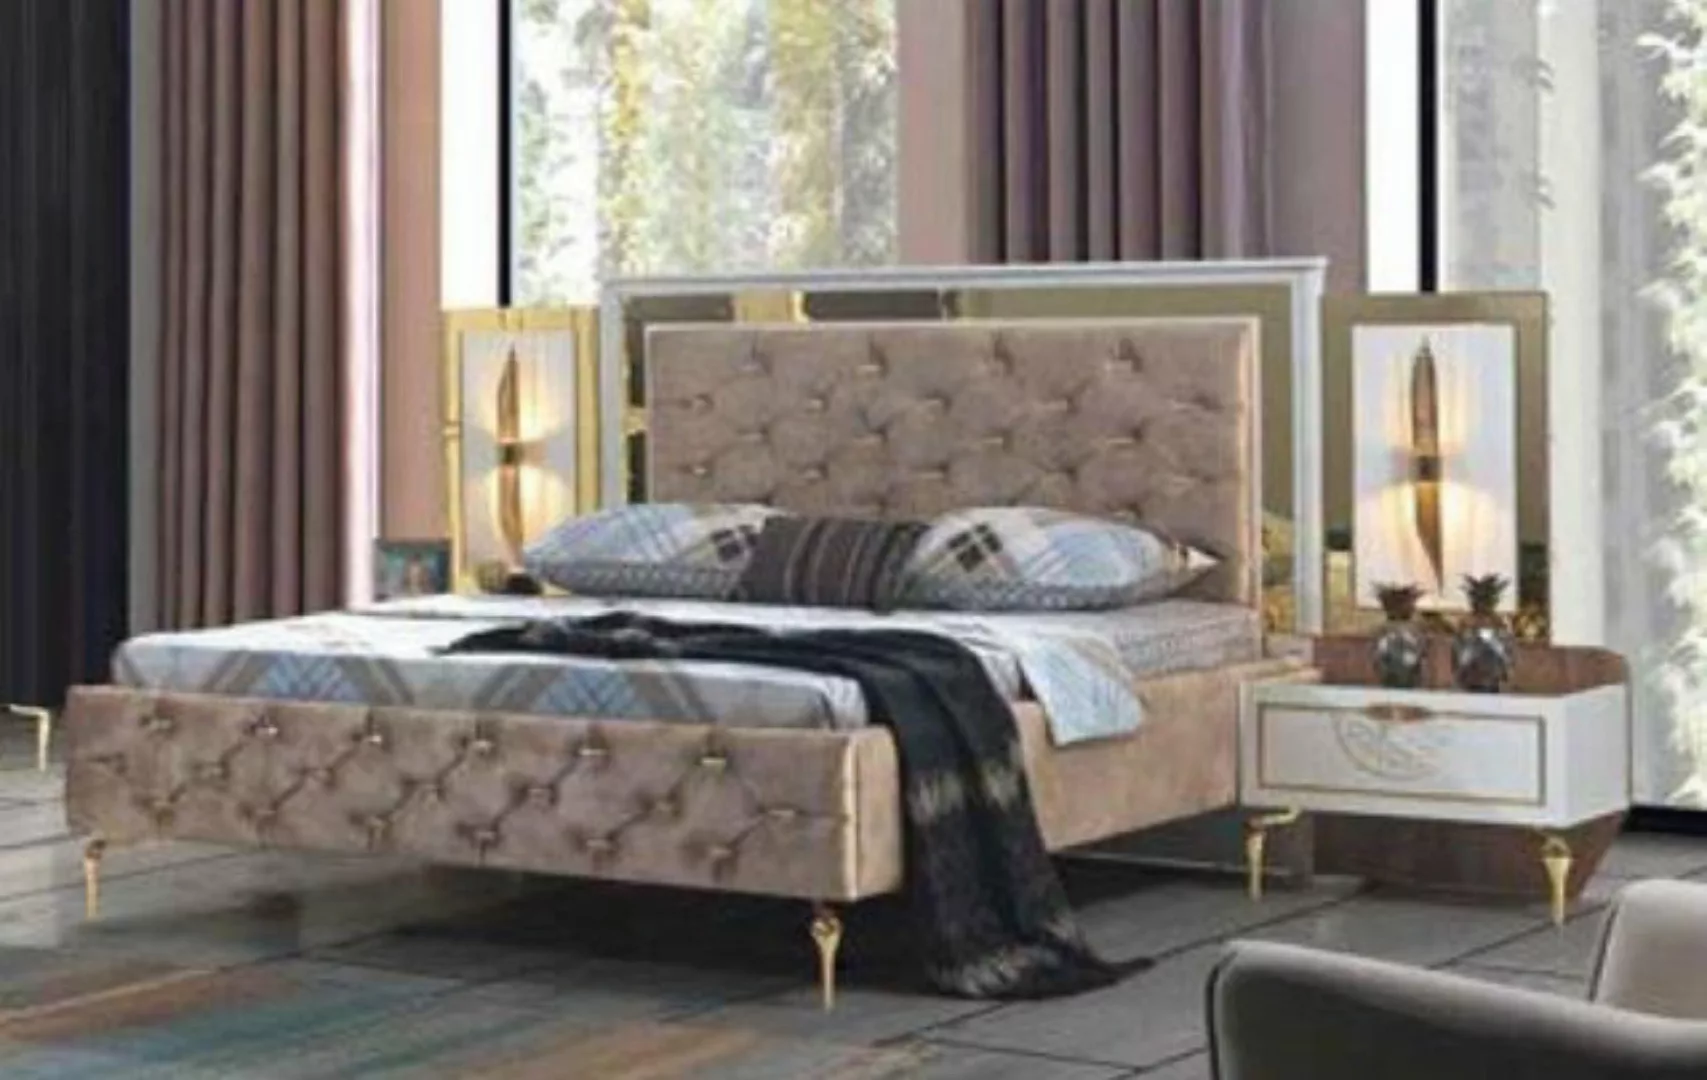 JVmoebel Bett, Chesterfield Bett Polster Design Luxus Doppel Hotel Betten günstig online kaufen